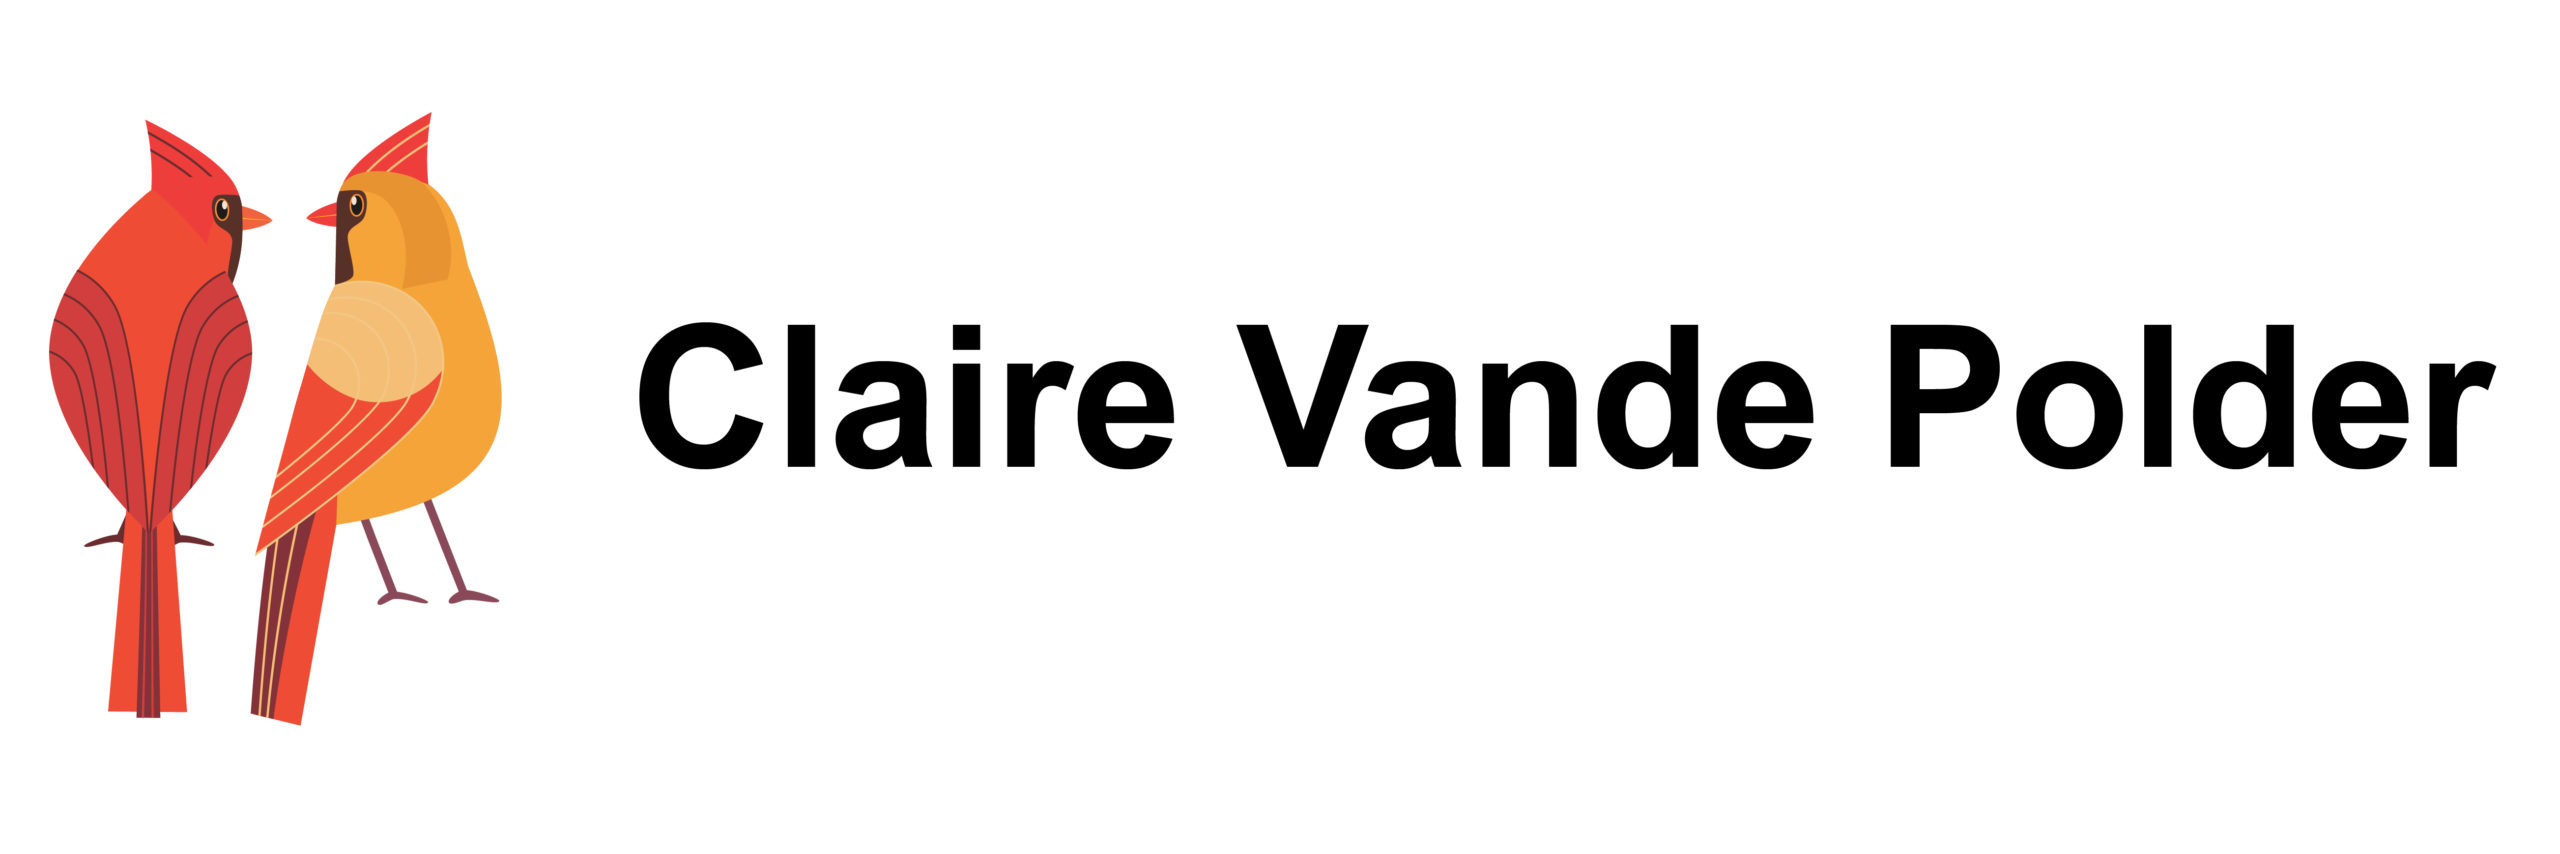 Claire Vande Polder